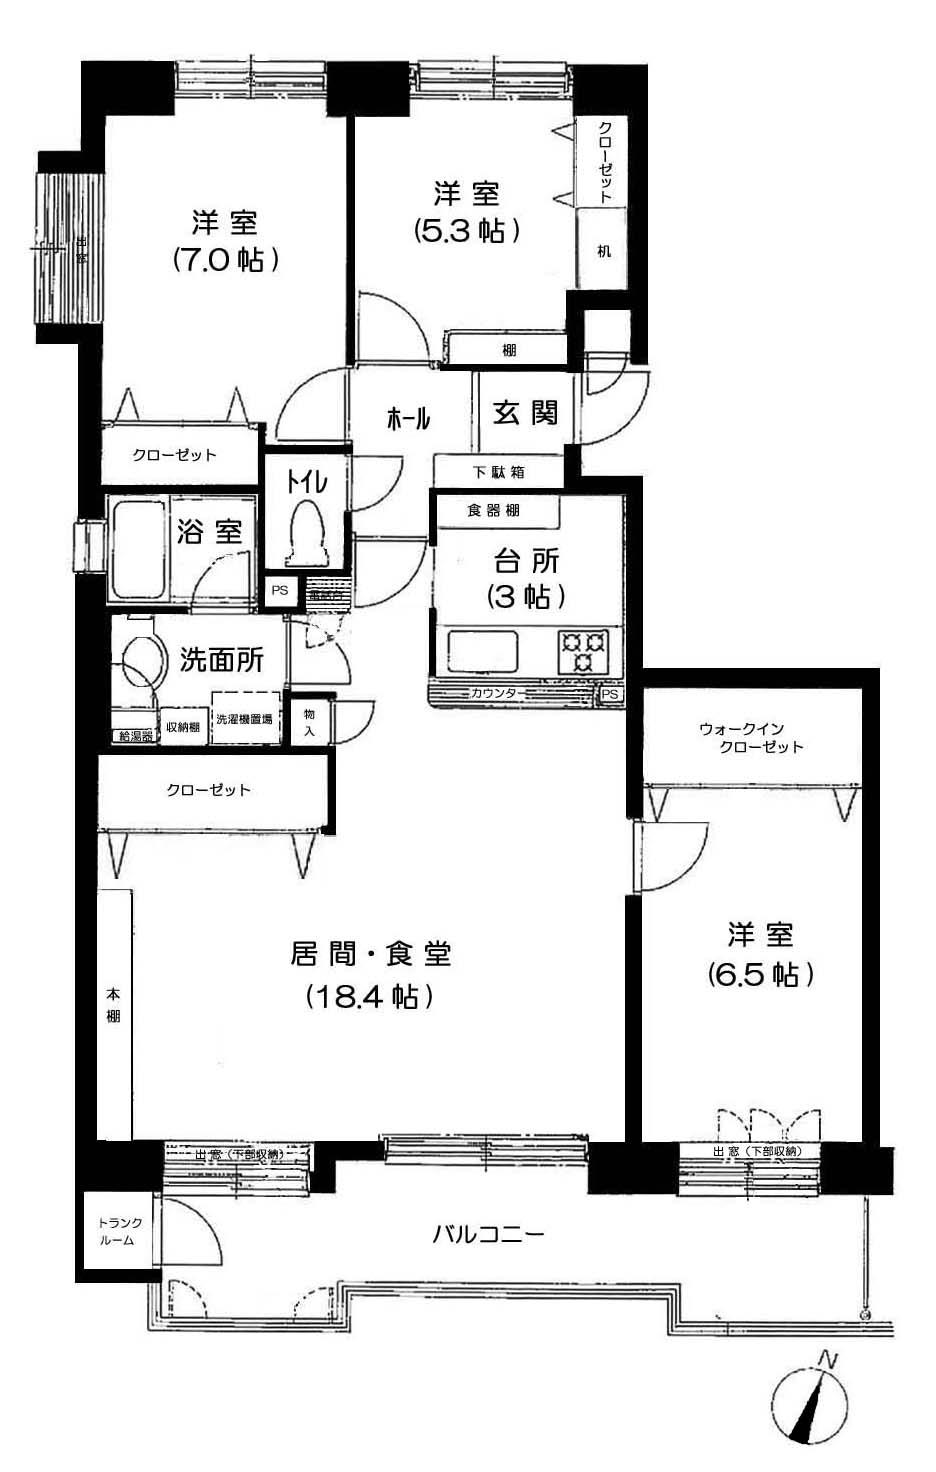 Floor plan. 3LDK, Price 22,700,000 yen, Occupied area 87.42 sq m , Balcony area 12.35 sq m